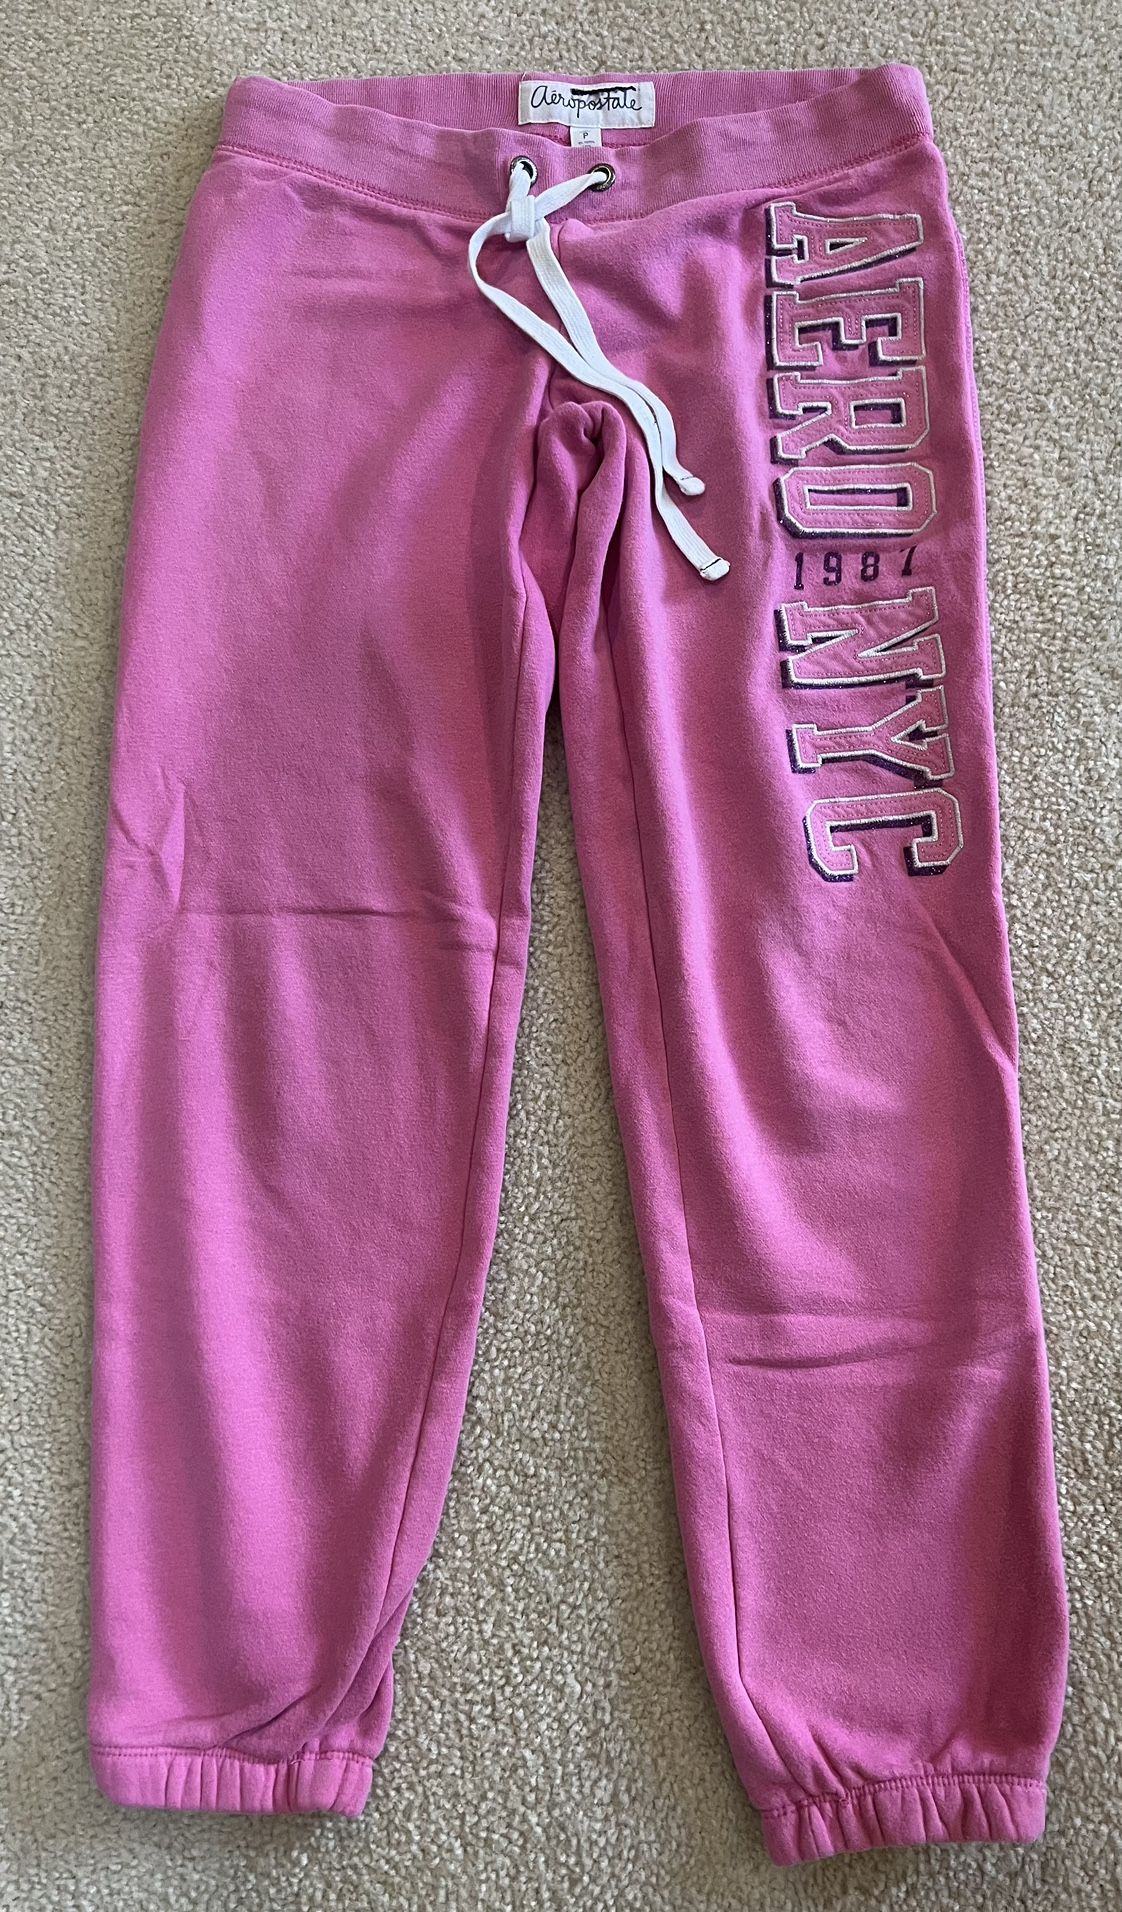 Aeropostale Pink Sweatpants size P/S